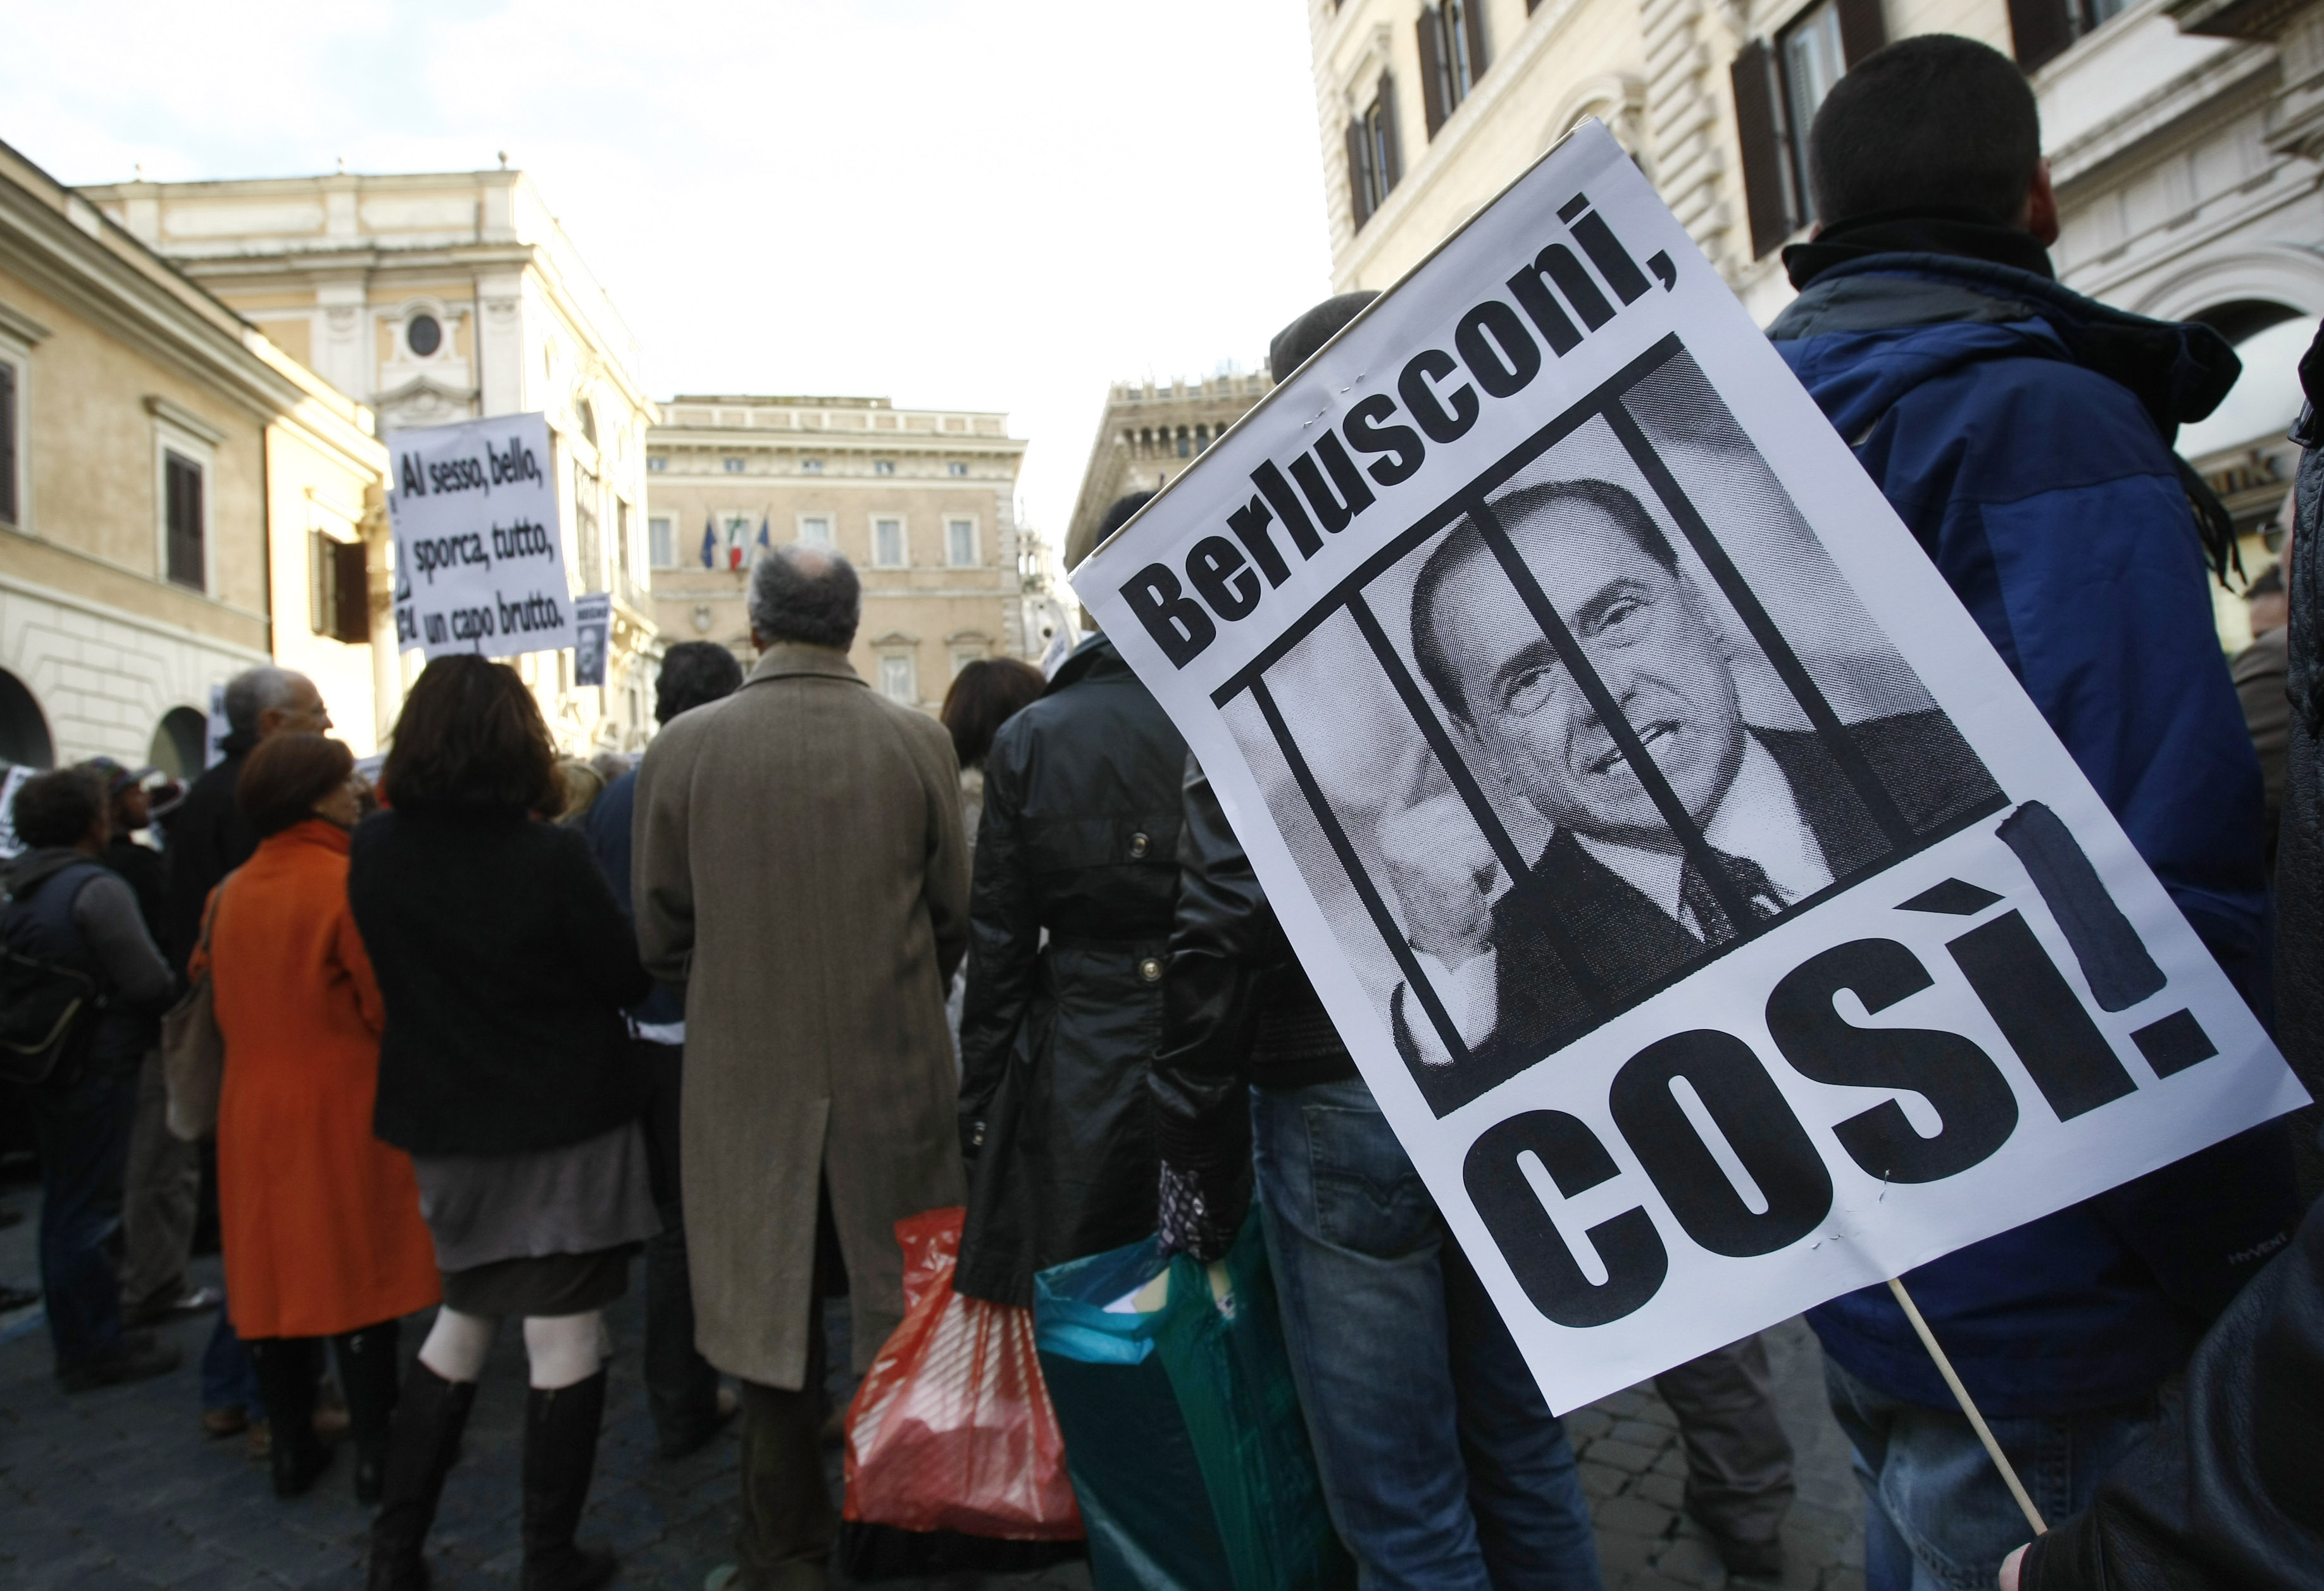 Köp av sexuell tjänst, Berlusconi, Sexskandal, Silvio Berlusconi, Prostitution, Italien